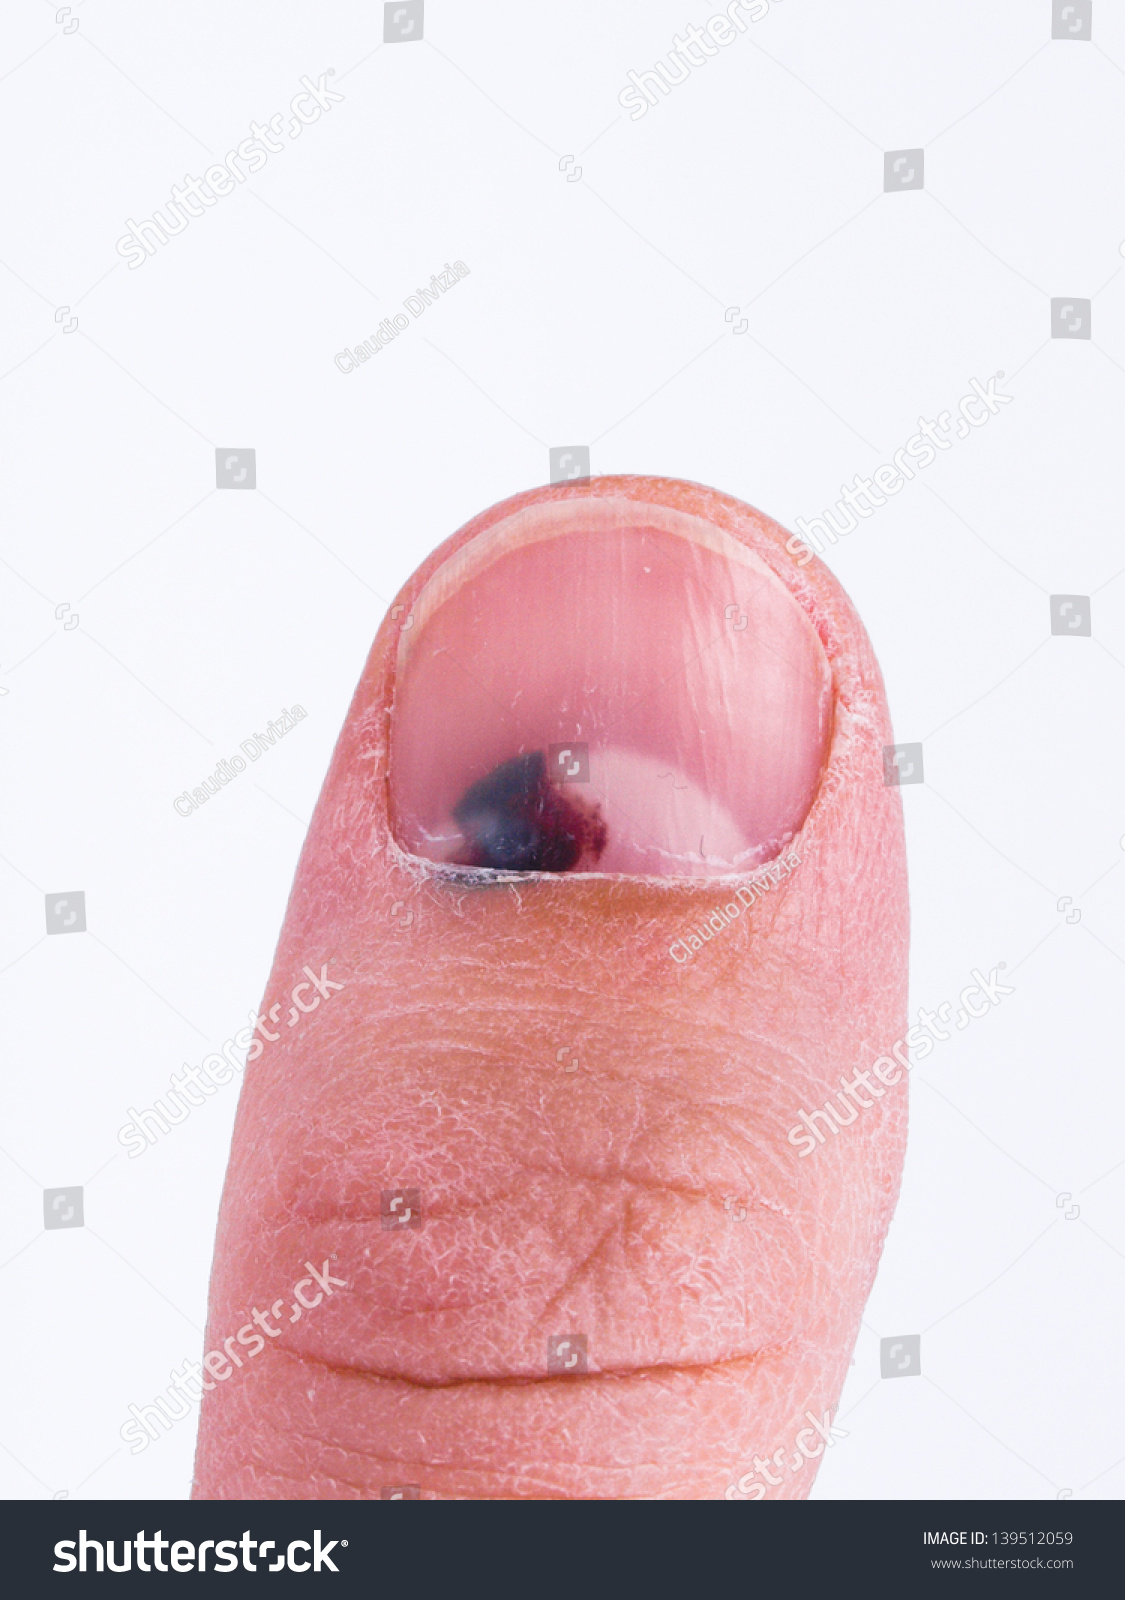 toenail condition